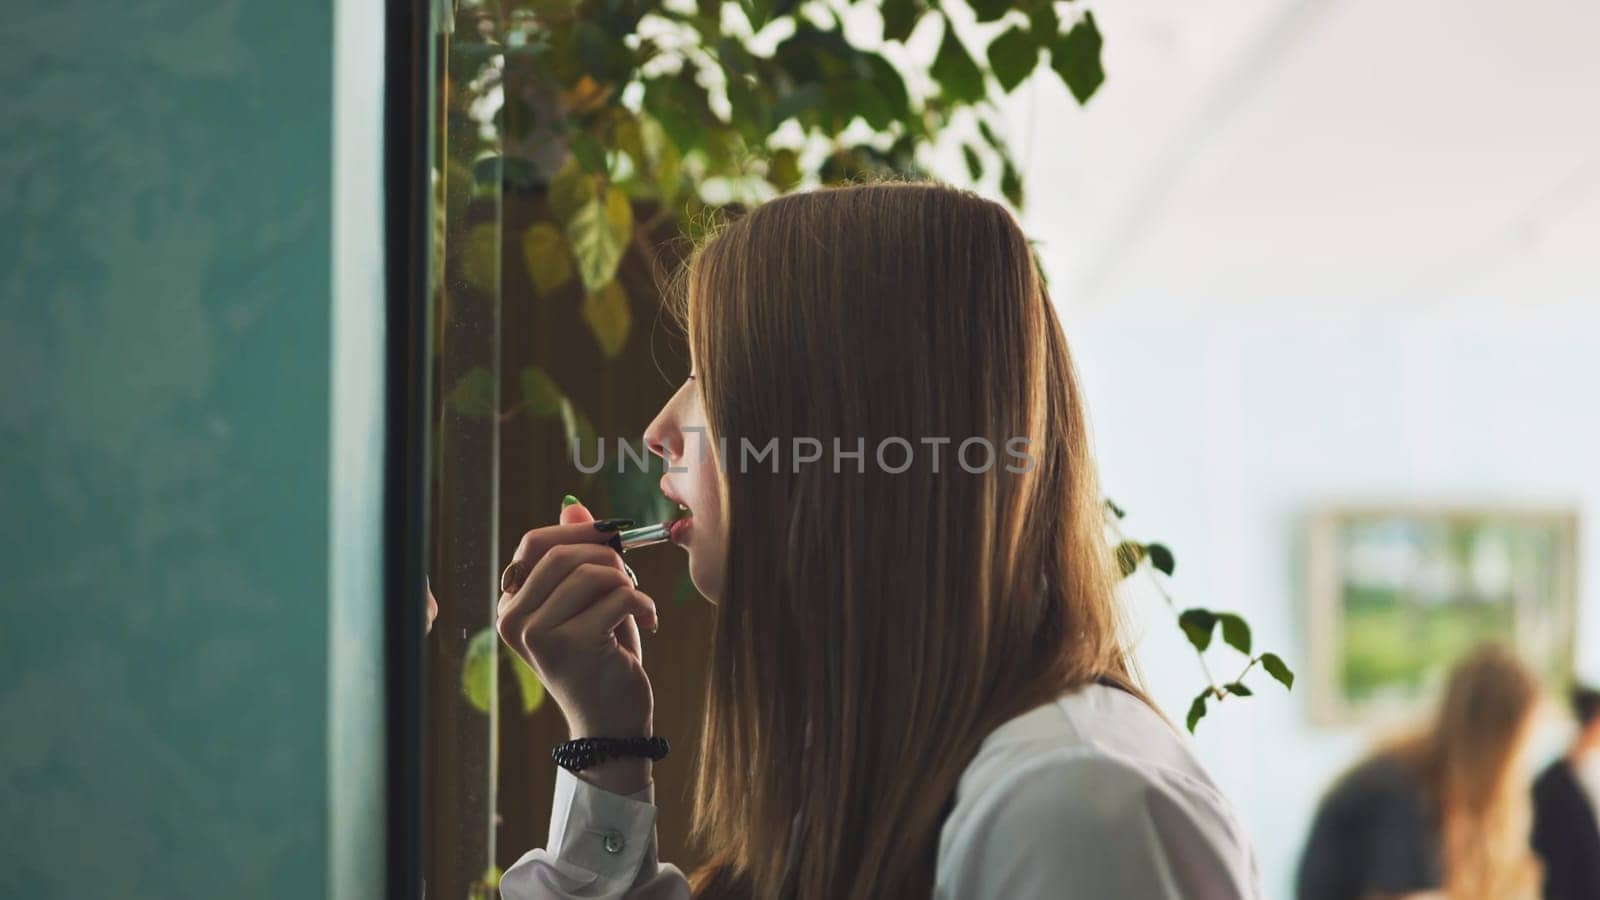 A schoolgirl paints her lips in front of the mirror